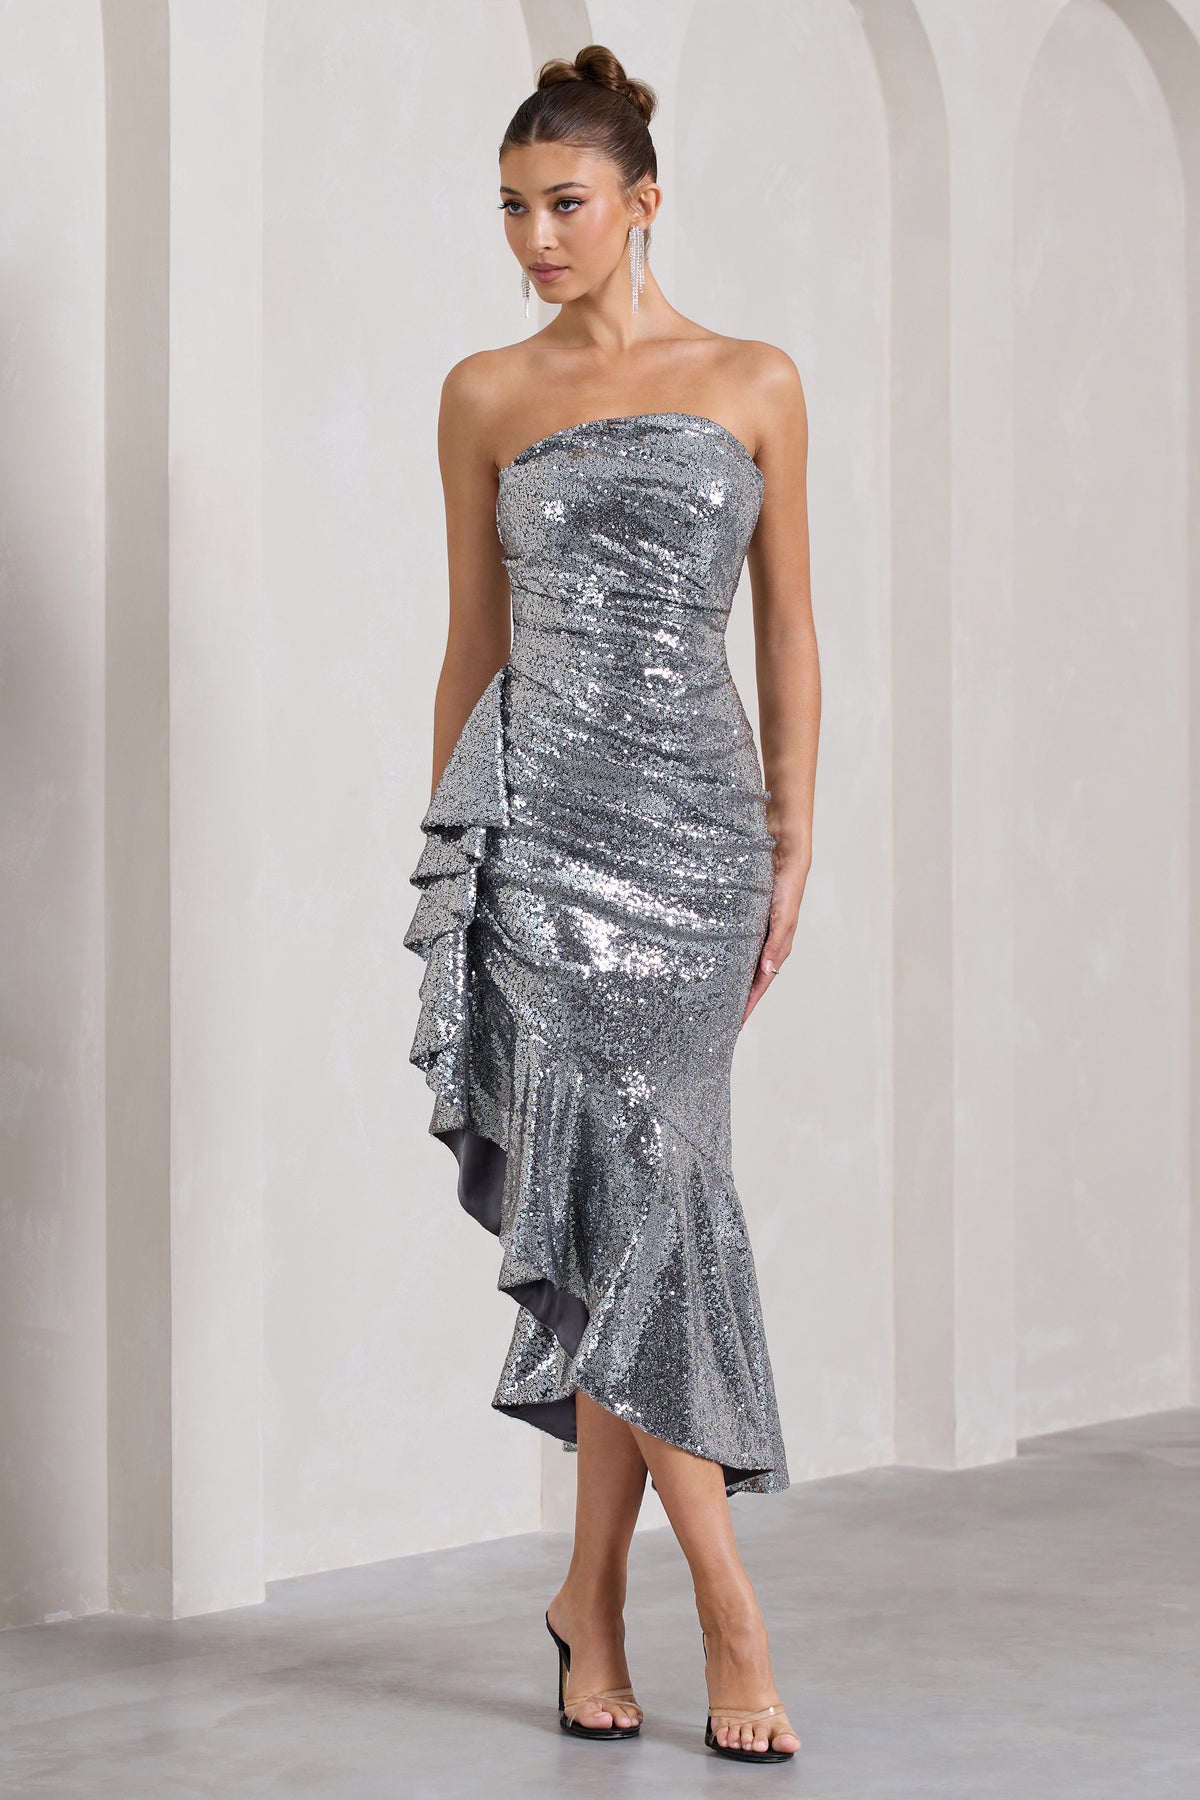 Light Grey Dress - Strapless Bodycon Dress - Grey Plunging Dress